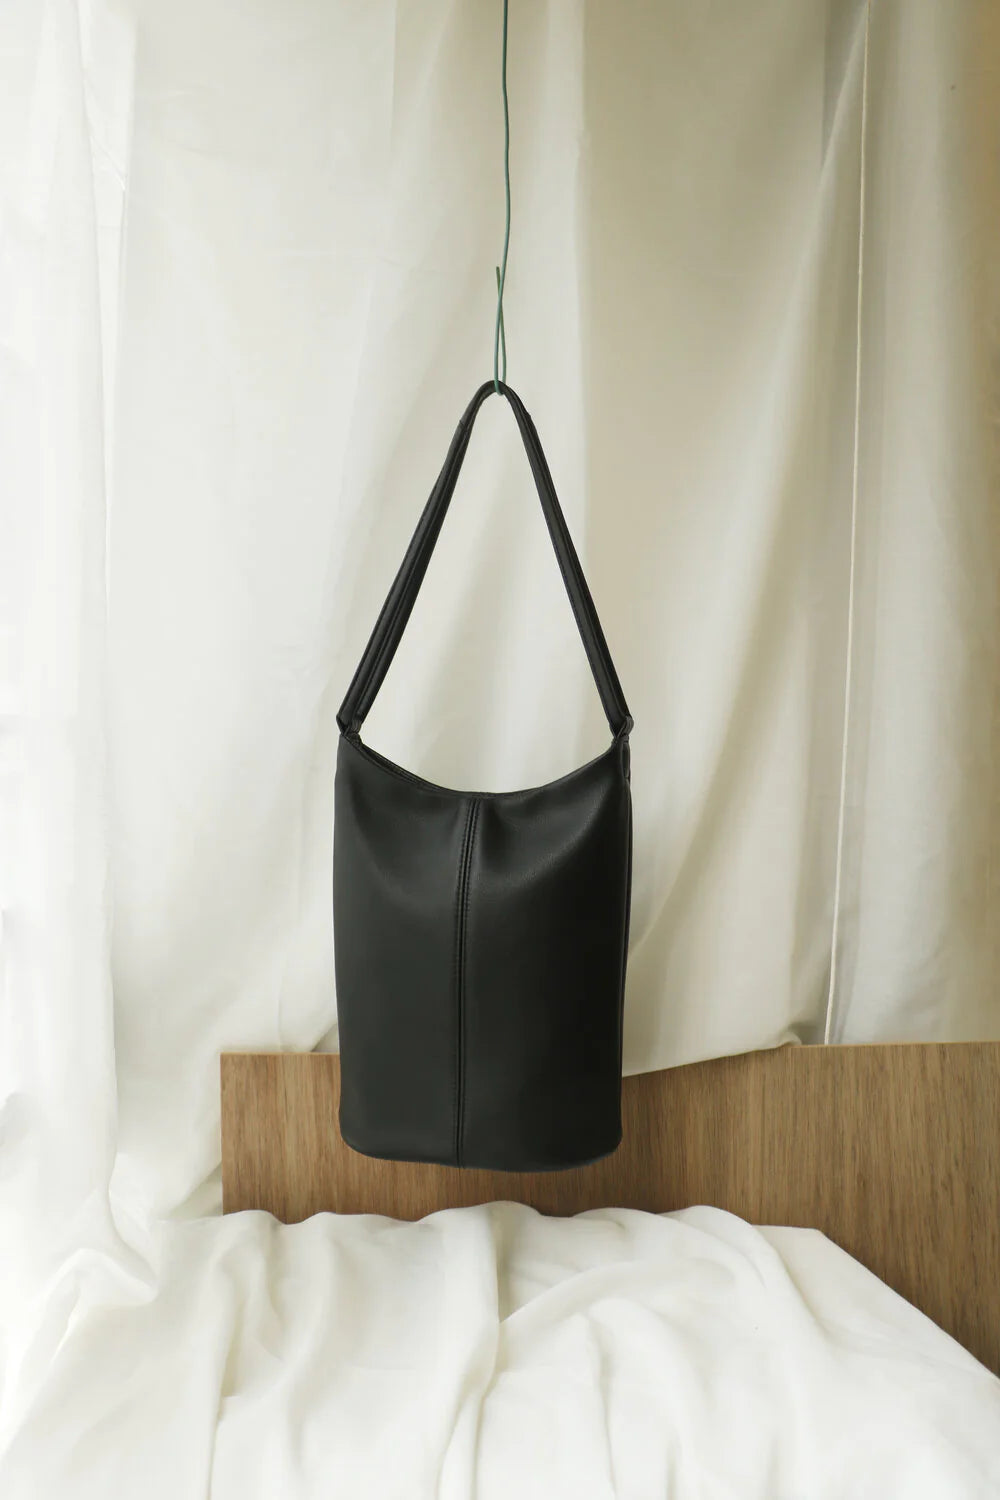 Lady Bag In Black